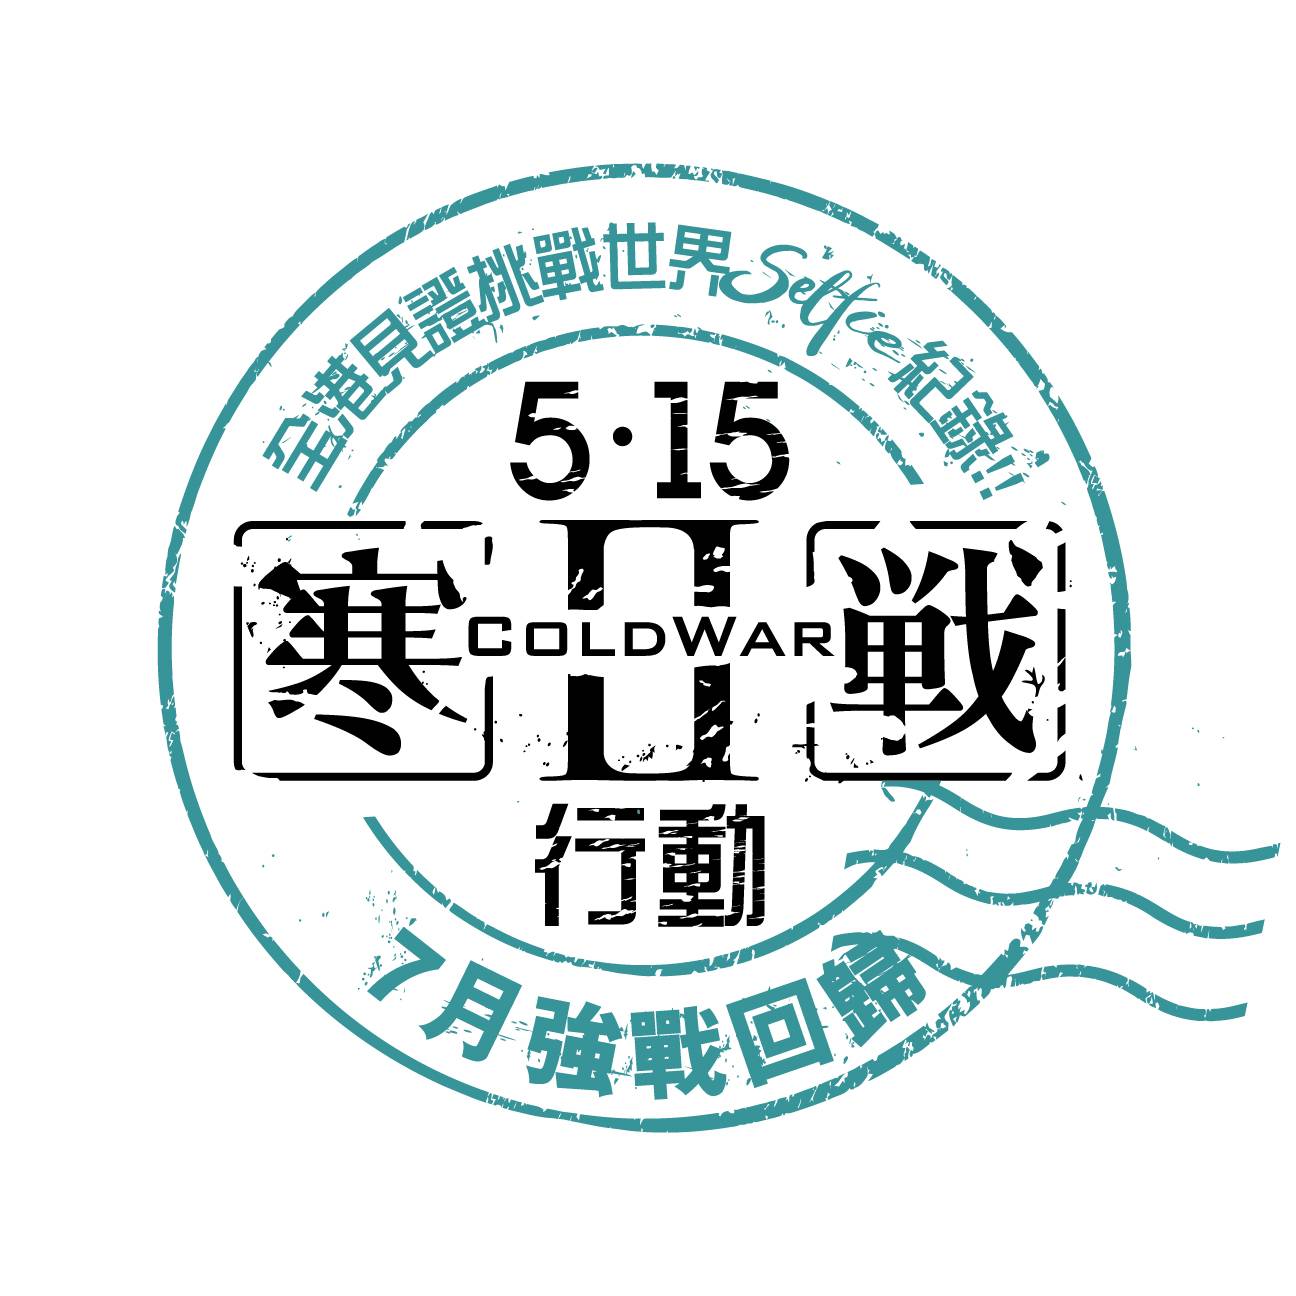 Cold War 2 515 Event Stamp Chop_R2